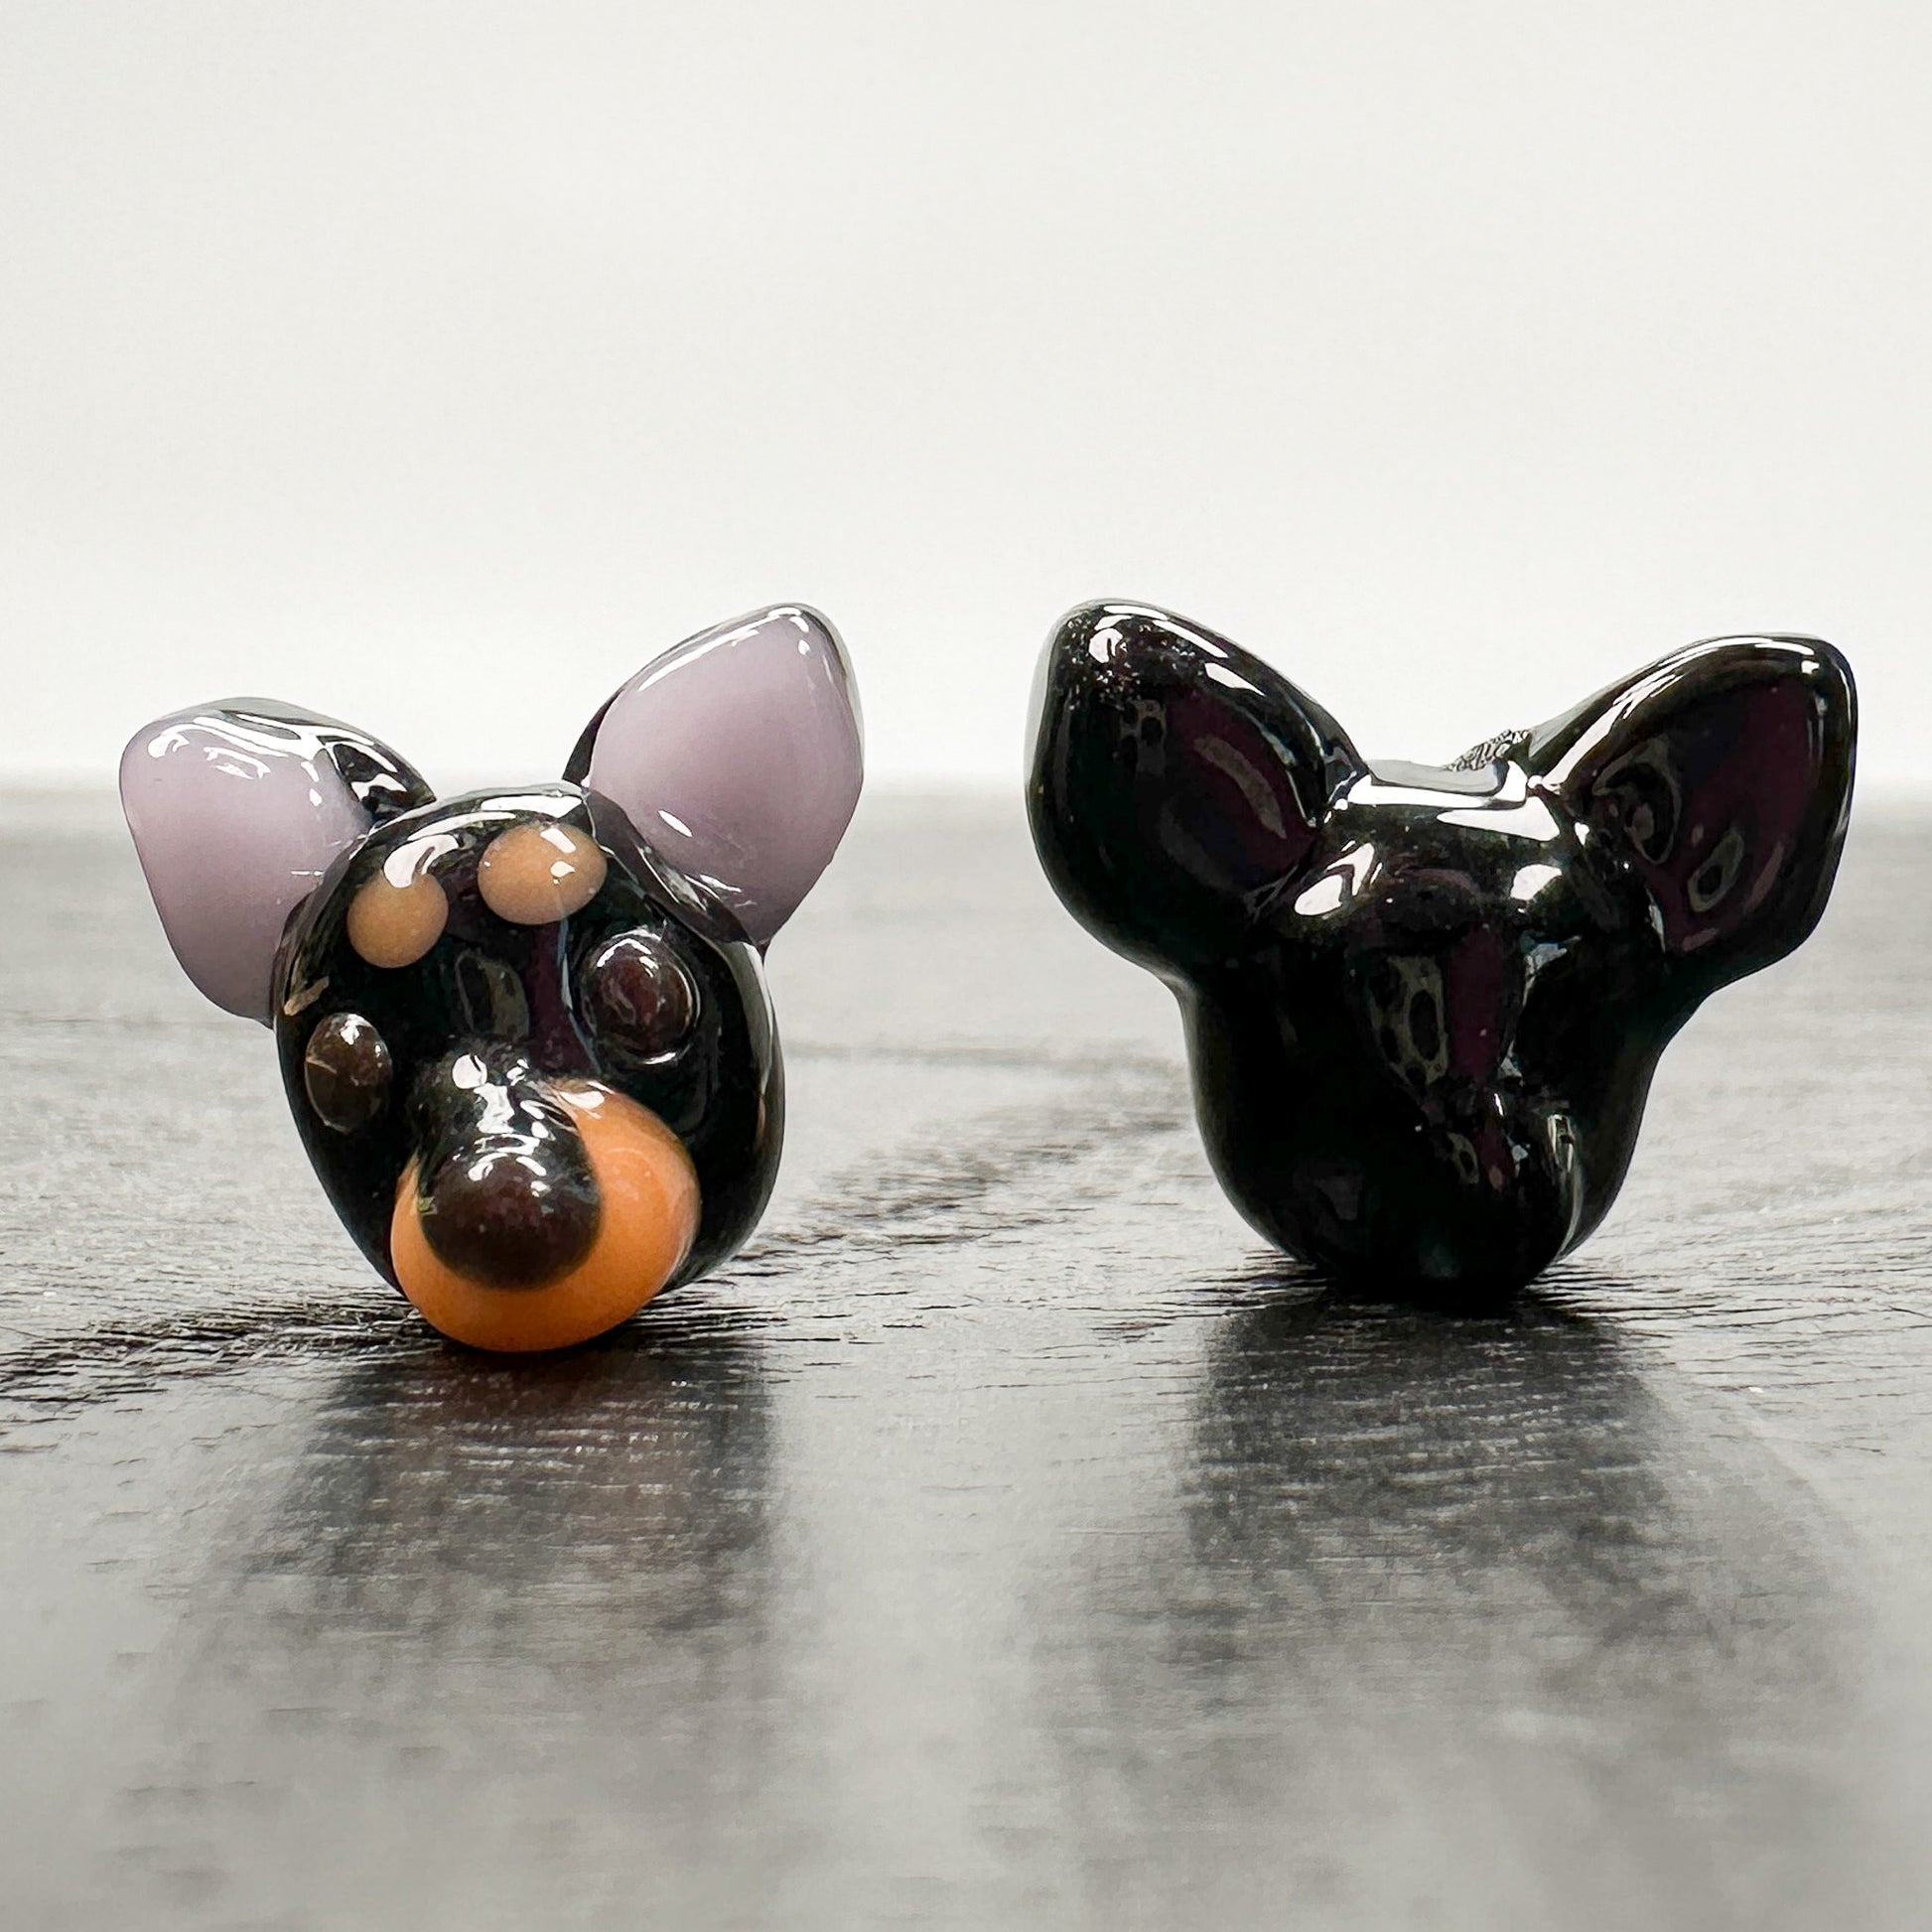 Chibi Beads - Miniature Pinscher Dog Black-The Bead Gallery Honolulu